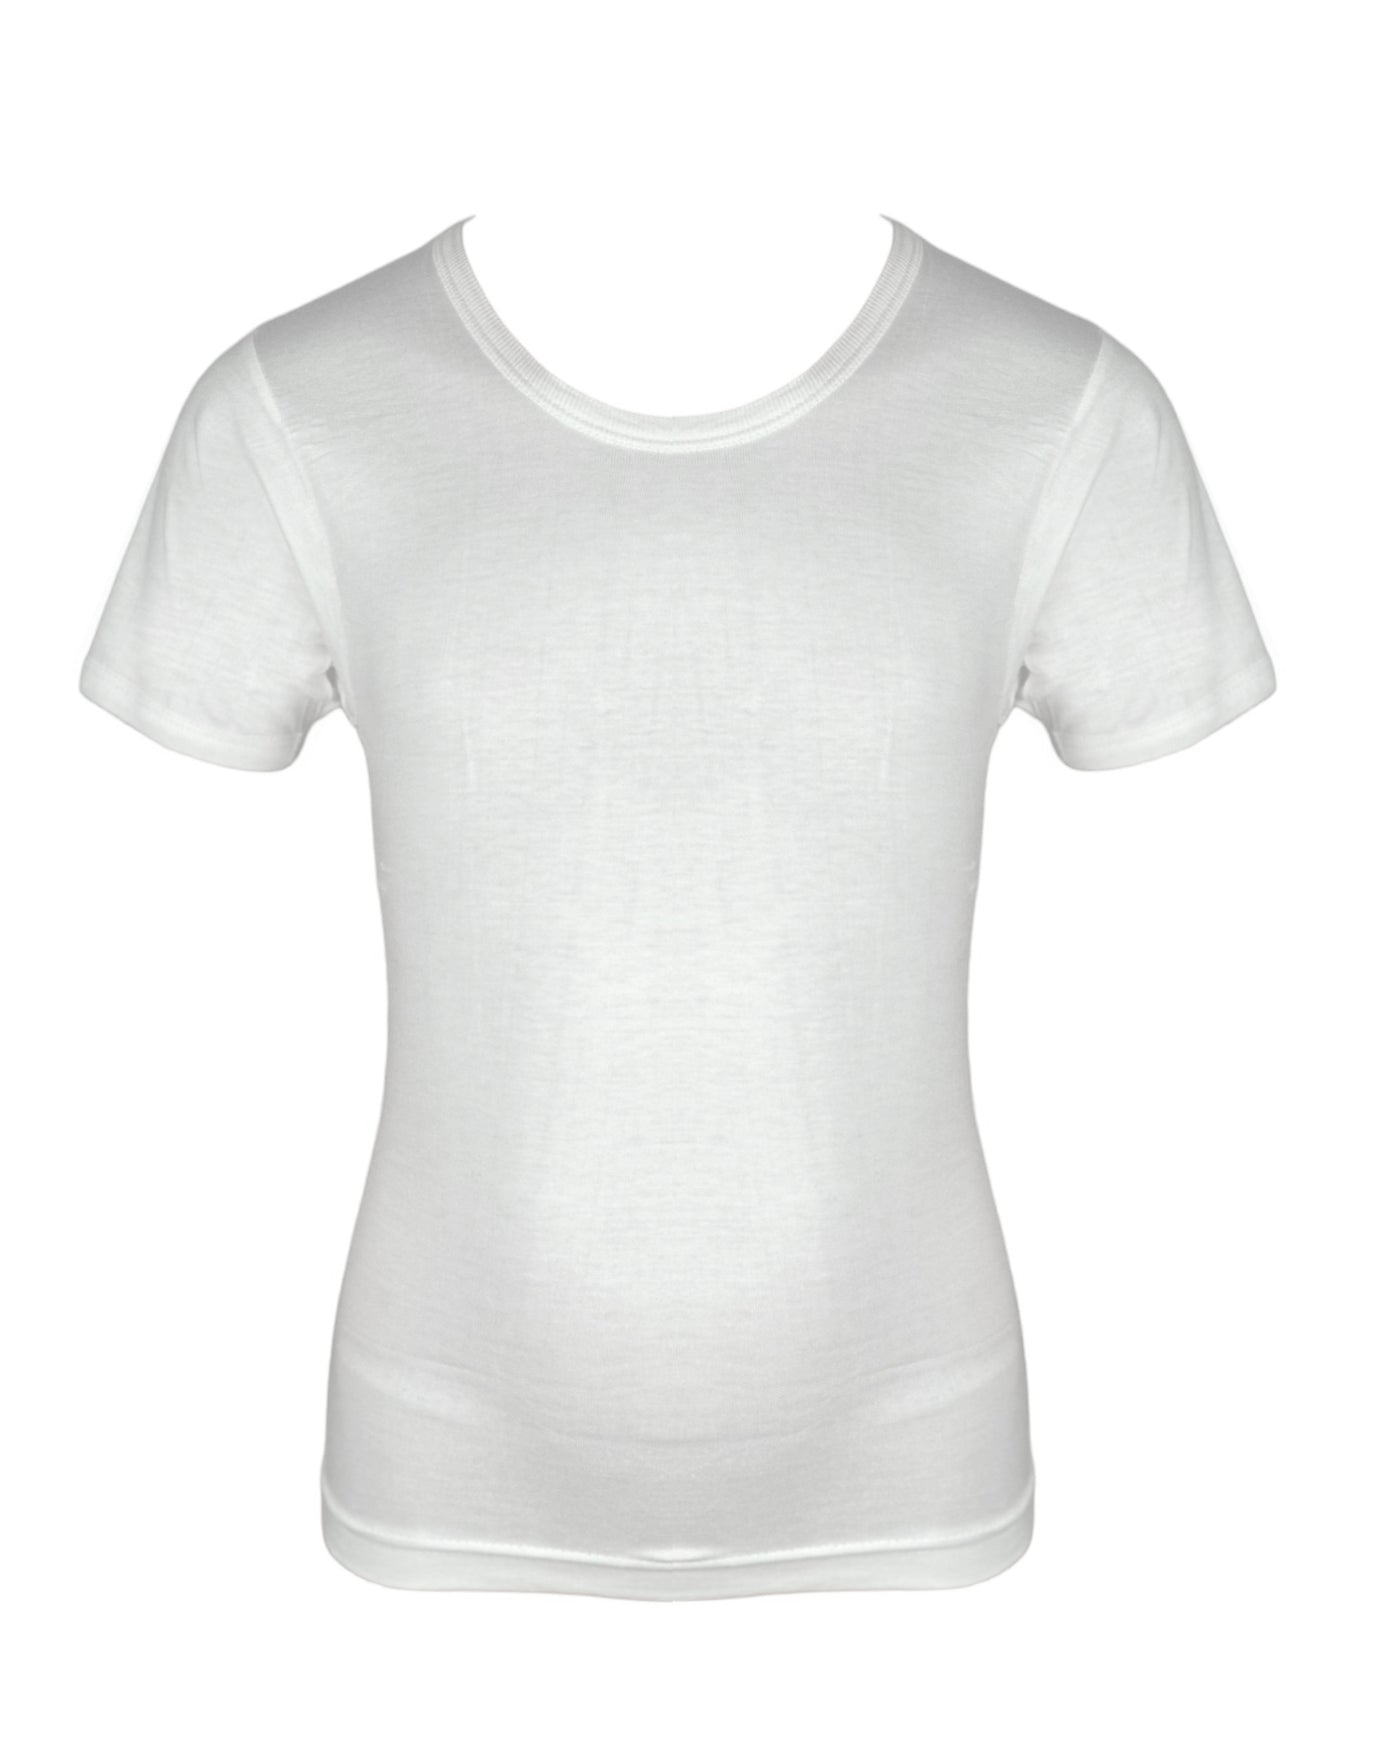 Alphabet Boys T-Shirt White 6 Pack (5/6yrs)